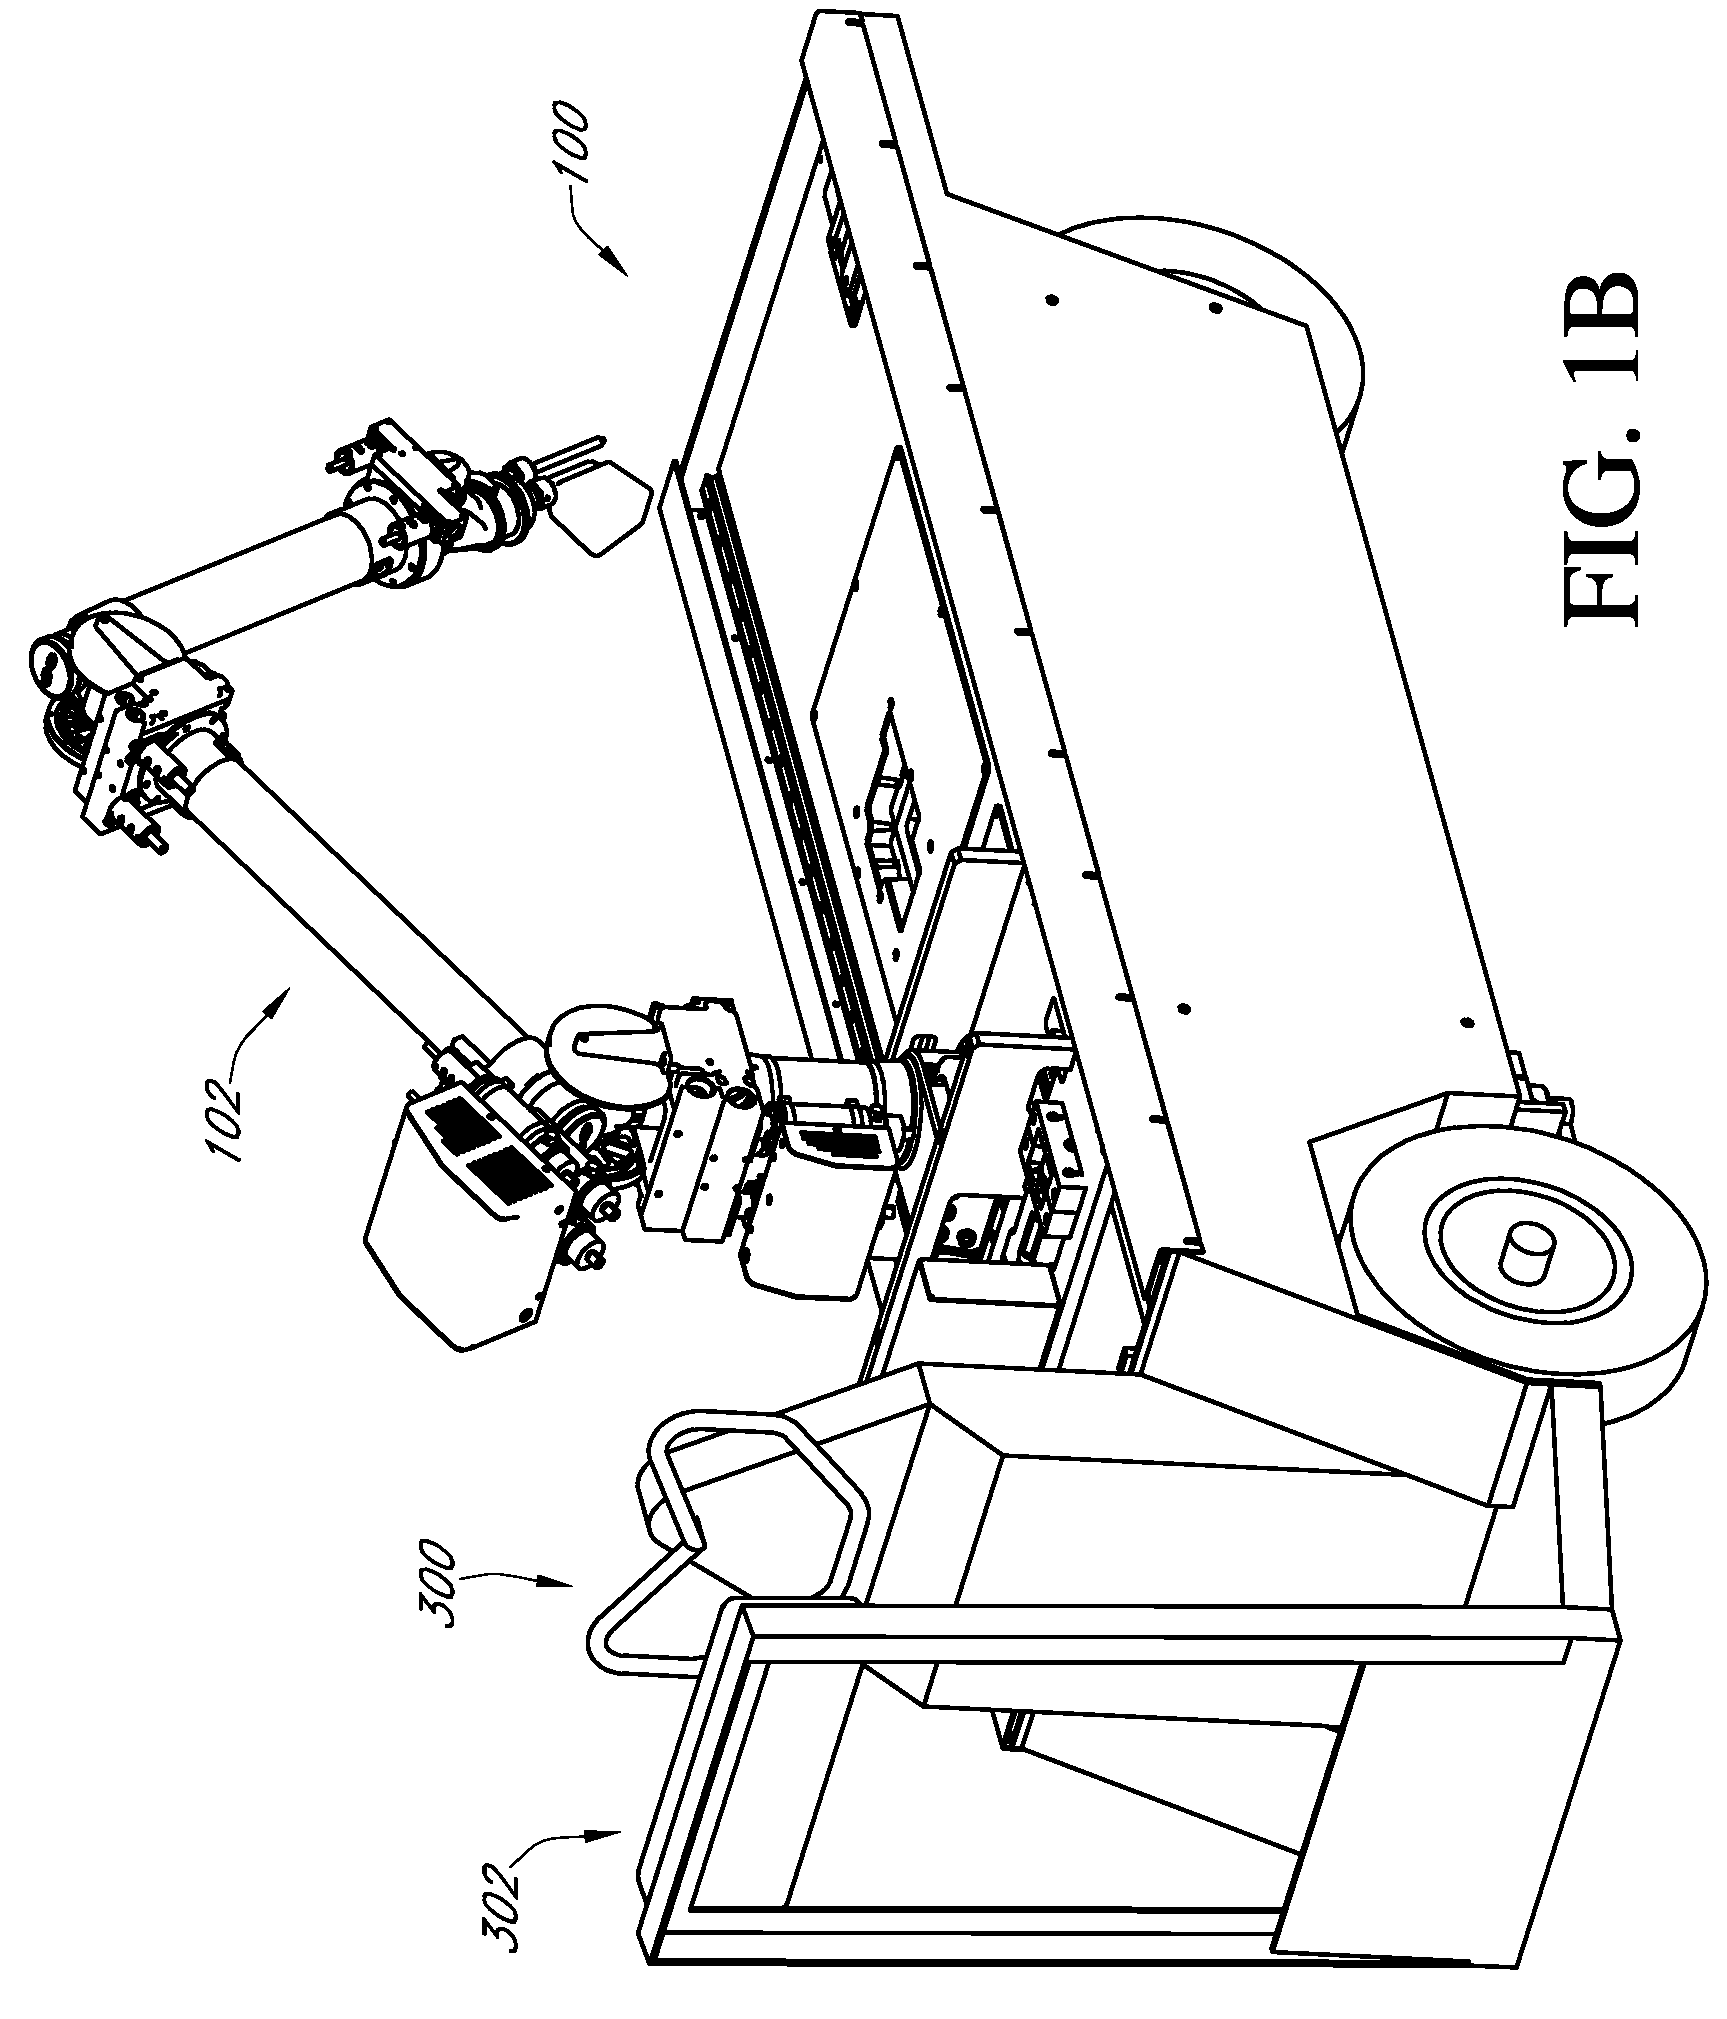 Vehicle having an articulator